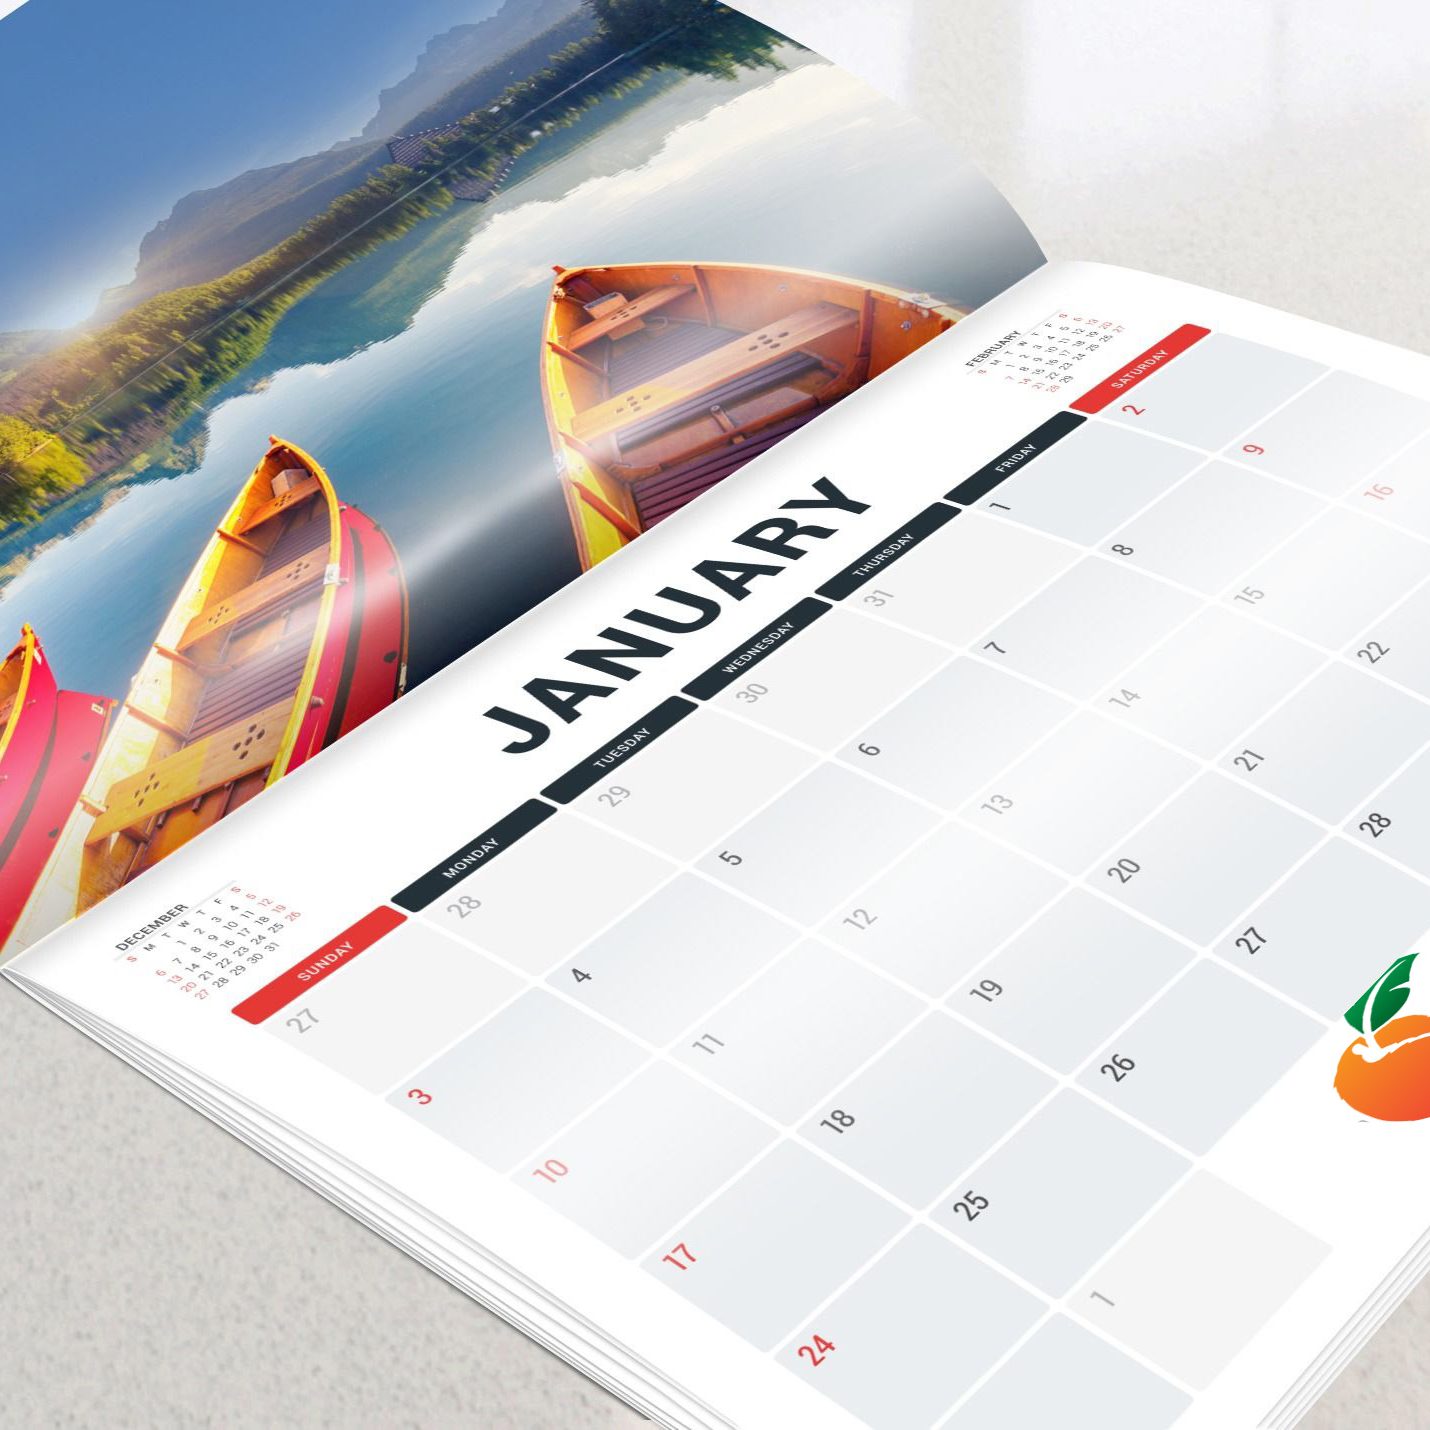 How to print calendars